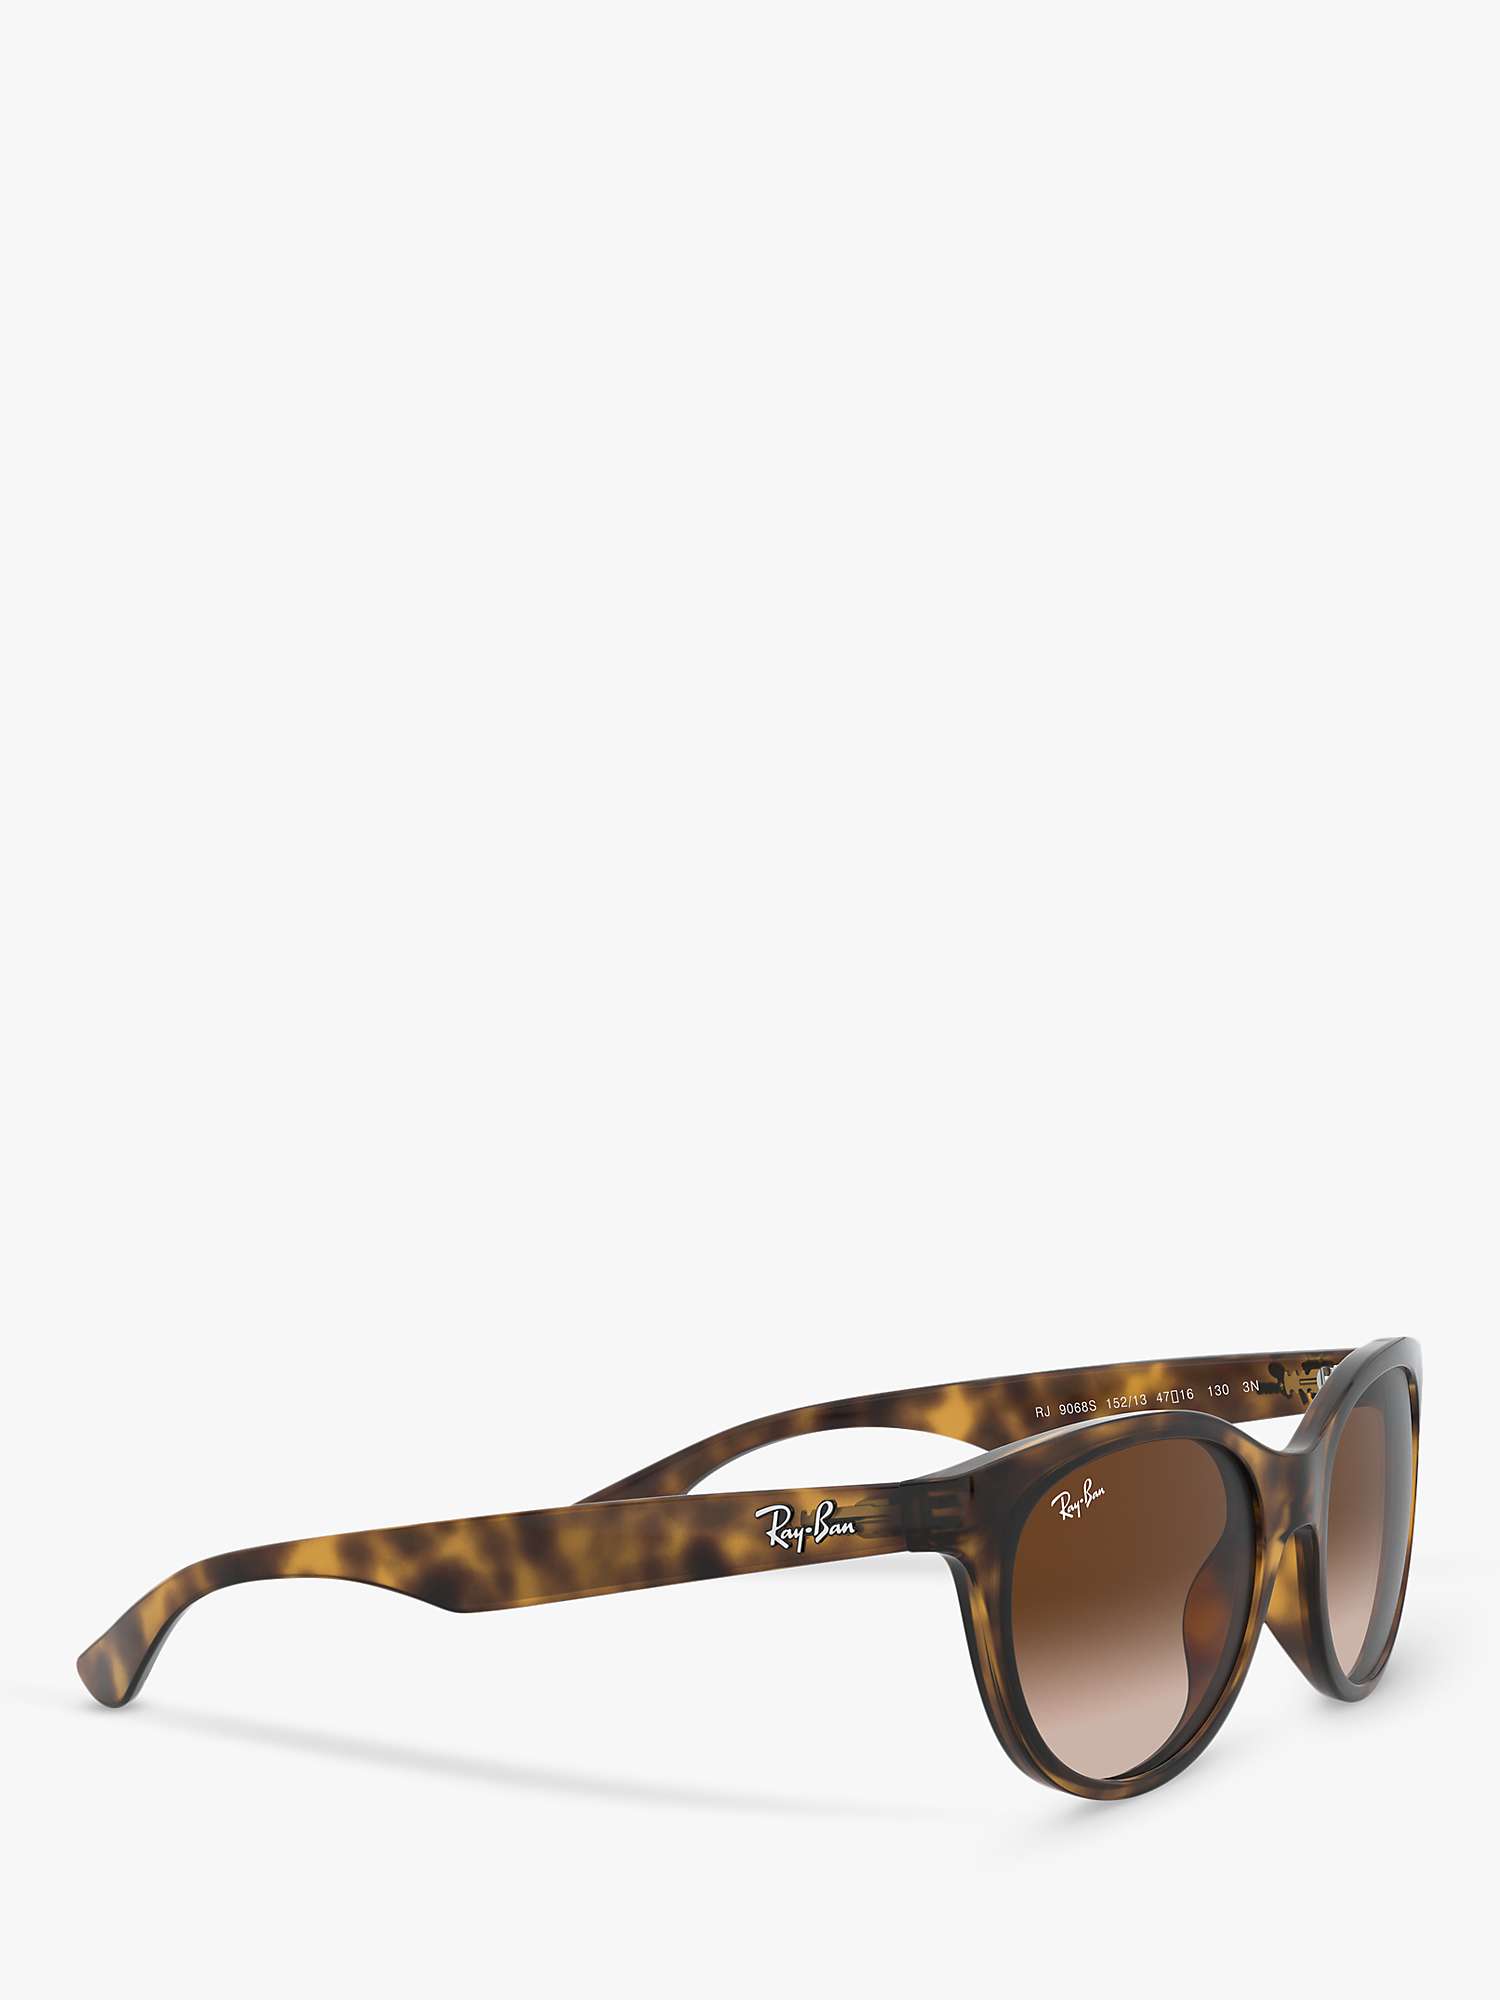 Buy Ray-Ban RJ9068S Women's Oval Sunglasses, Havana/Brown Gradient Online at johnlewis.com